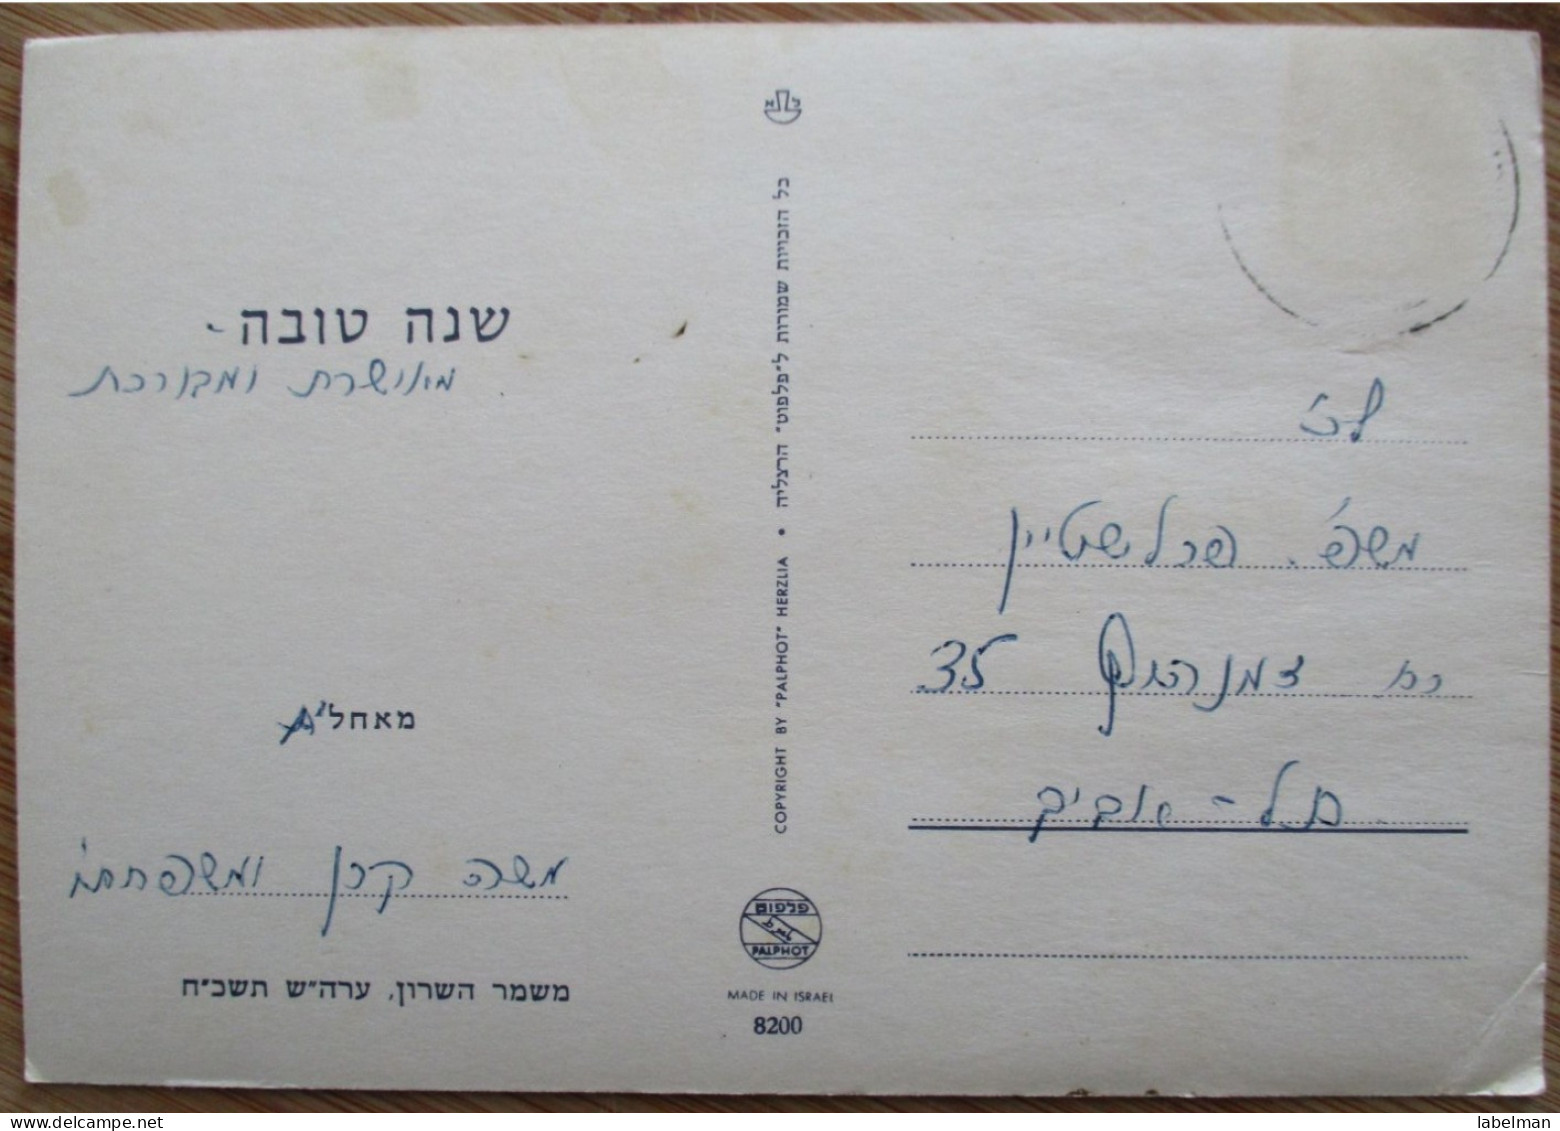 ISRAEL KIBBUTZ MISHMAR HASHARON AK CARD SHANA TOVA NEW YEAR JUDAICA PC CP POSTKARTE CARTE POSTALE POSTCARD ANSICHTSKARTE - Etiquettes D'hotels